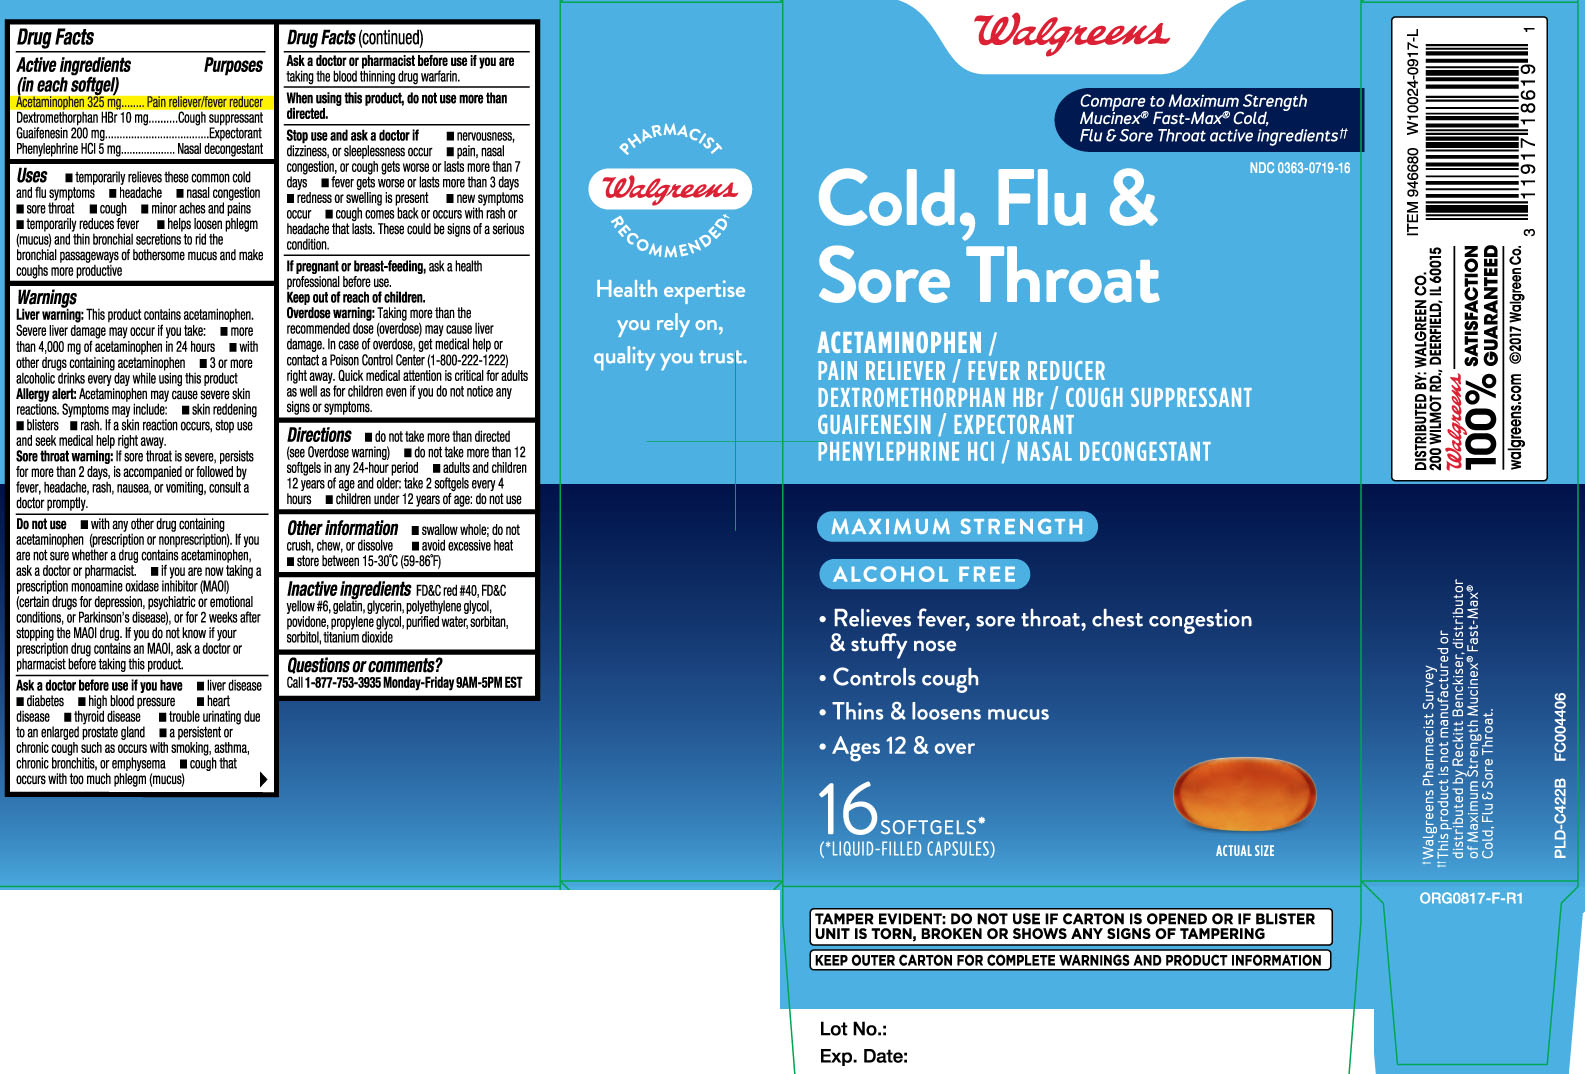 Acetaminophen 325 mg, Dextromethorphan HBr 10 mg, Guaifenesin 200 mg, Phenylephrine HCI 5 mg